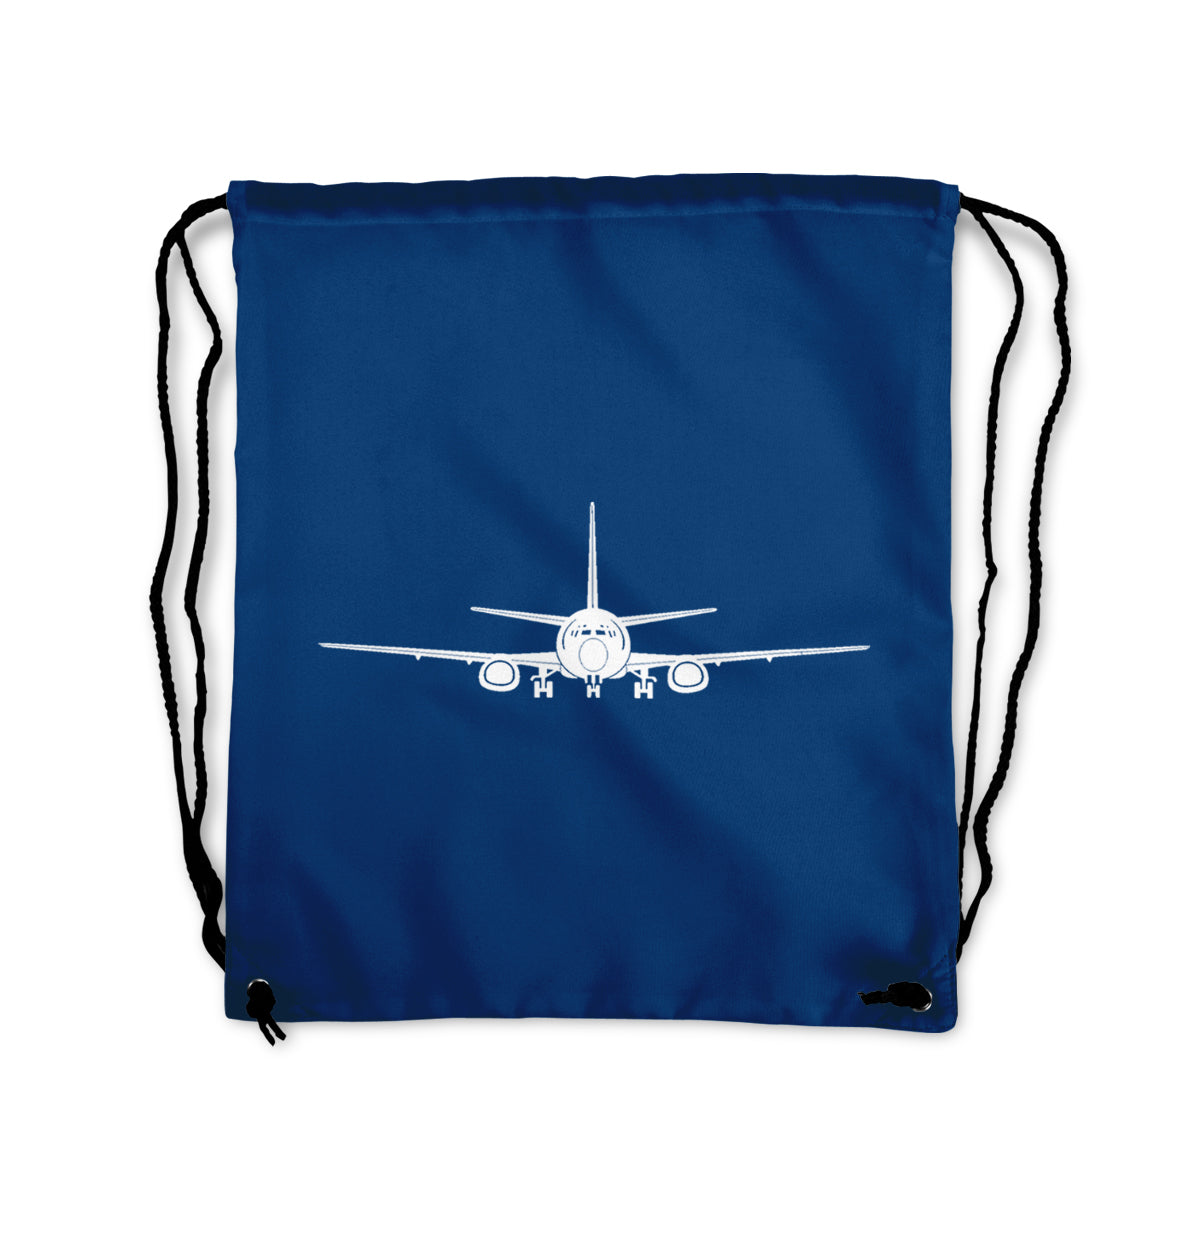 Boeing 737 Silhouette Designed Drawstring Bags